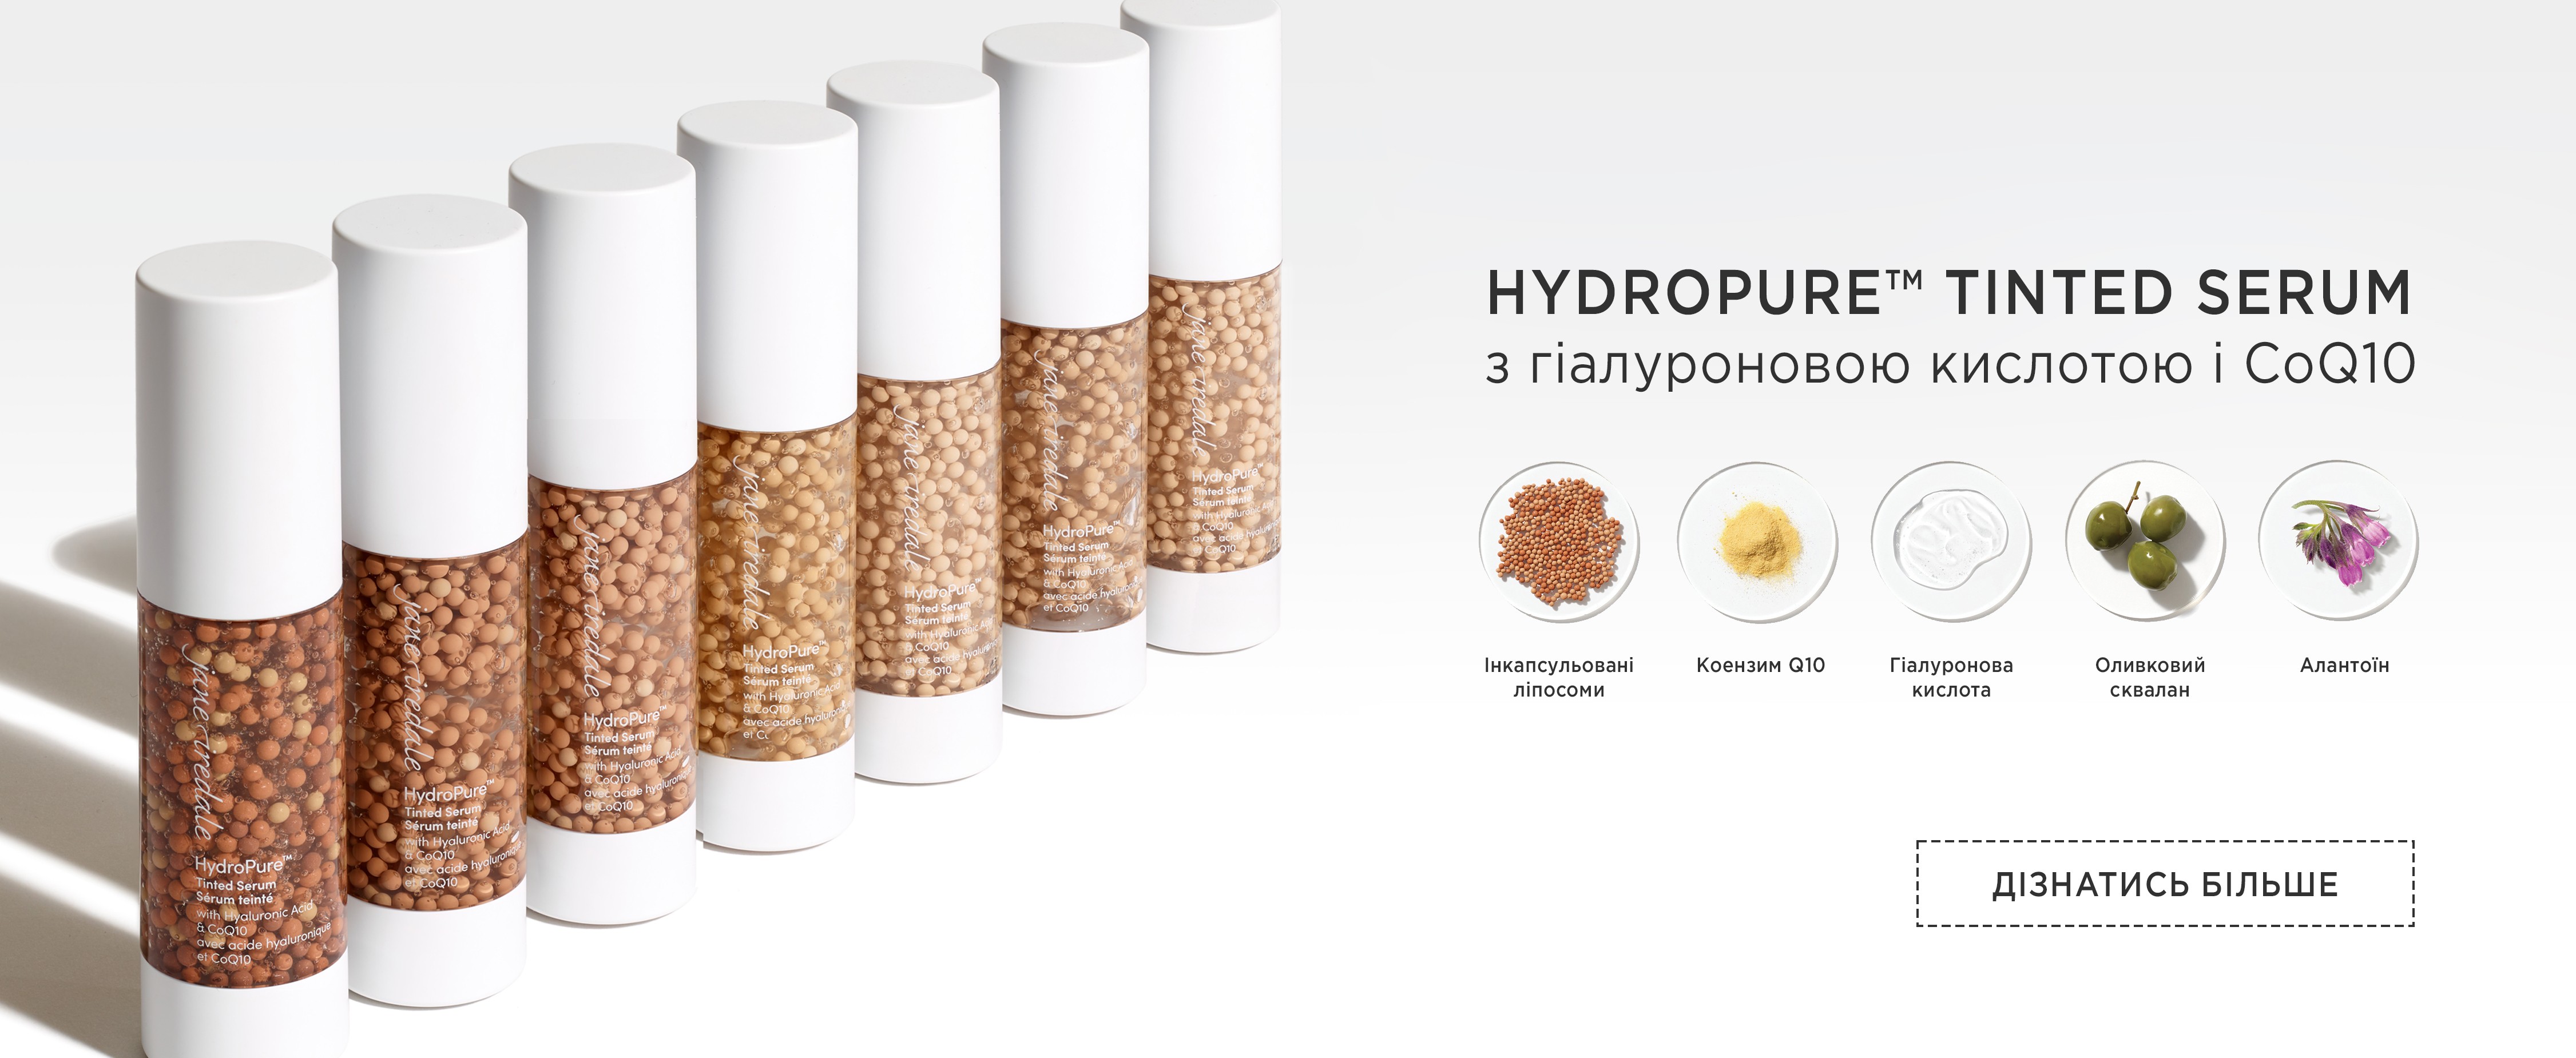 HydroPure™ Tinted Serum з гіалуроновою кислотою та CoQ10